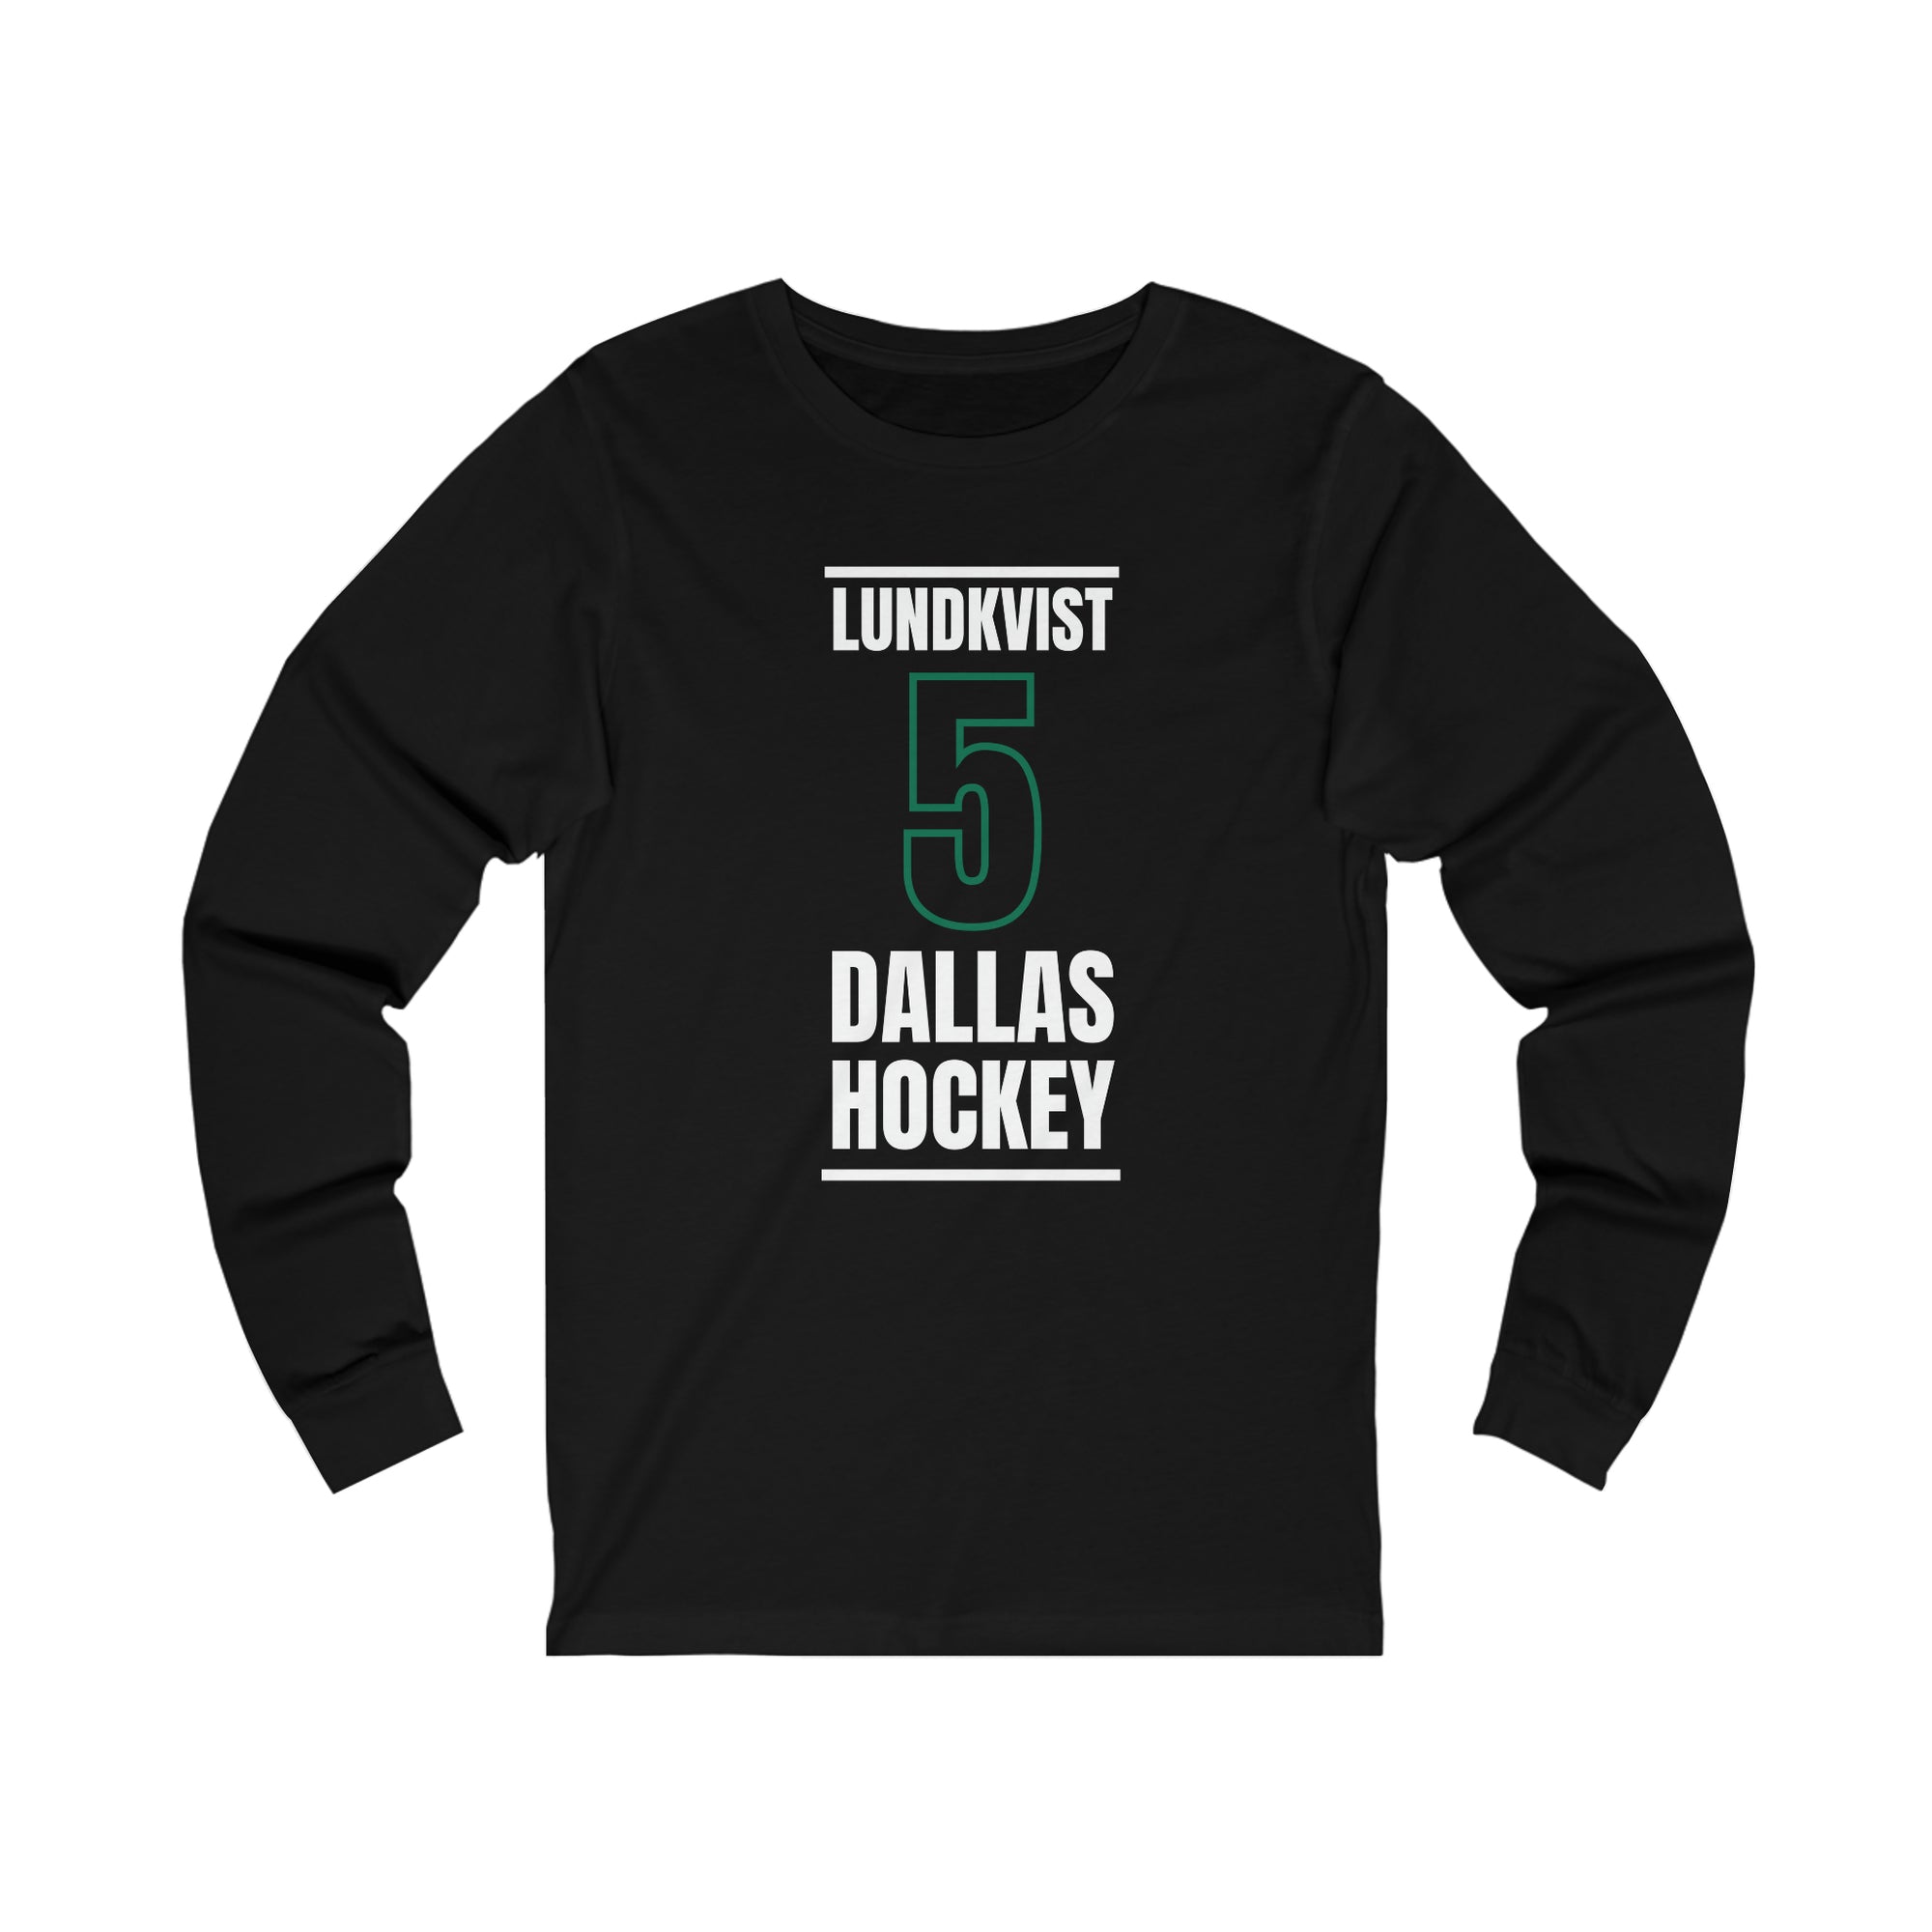 Lundkvist 5 Dallas Hockey Black Vertical Design Unisex Jersey Long Sleeve Shirt